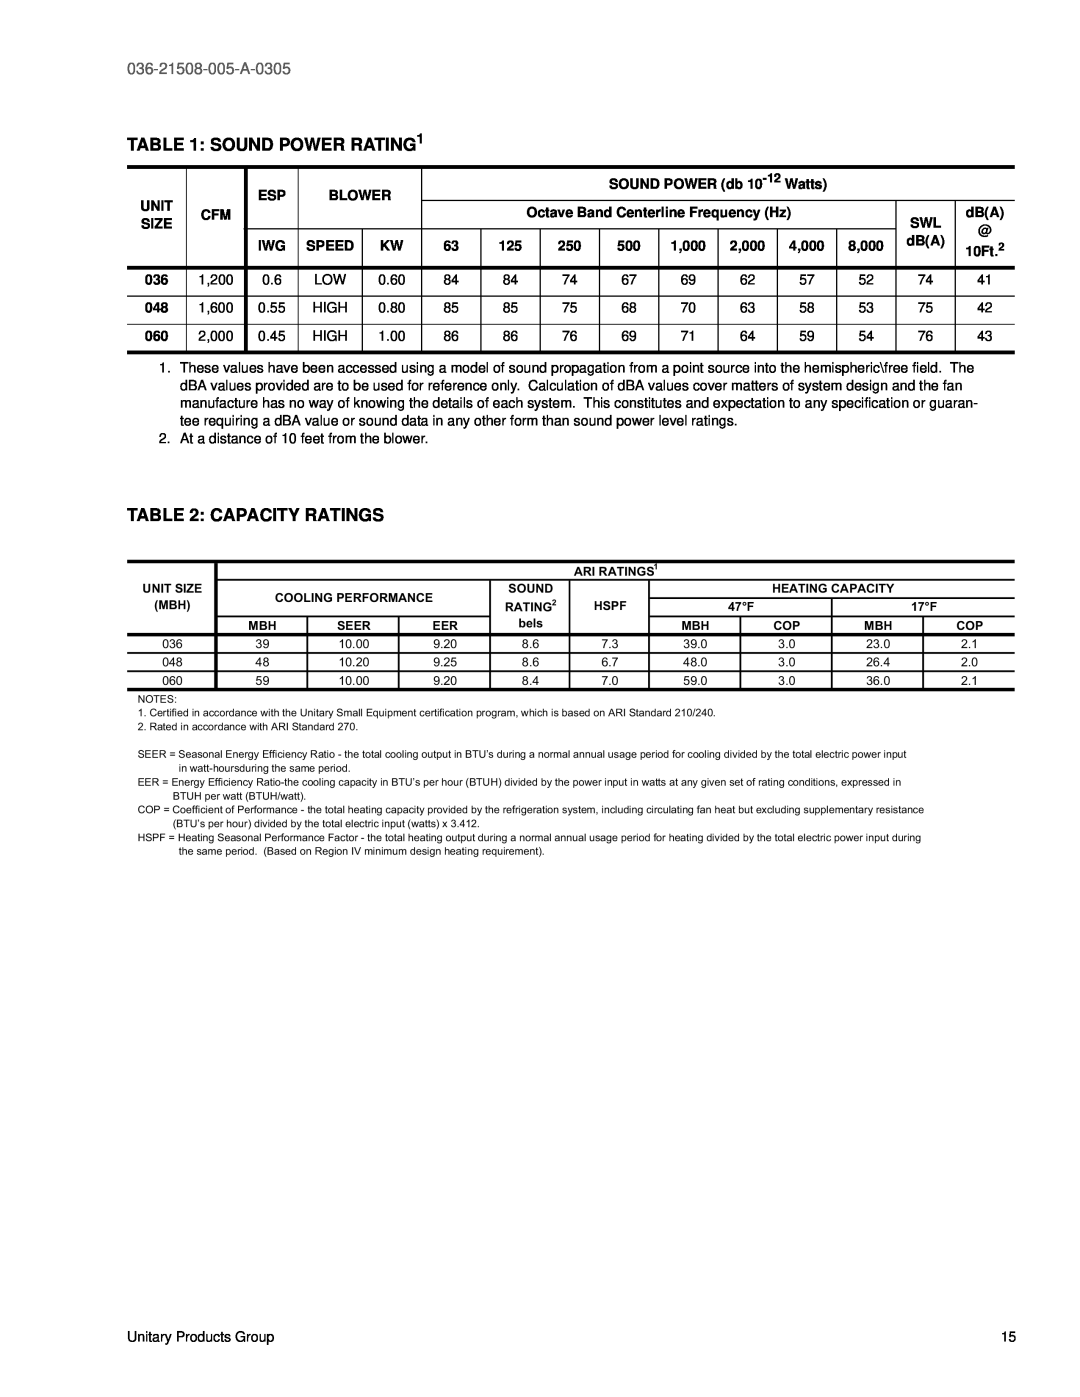 York BQ 060, BQ 036, BQ 048 warranty SOUND POWER RATING1, Capacity Ratings, 036-21508-005-A-0305 